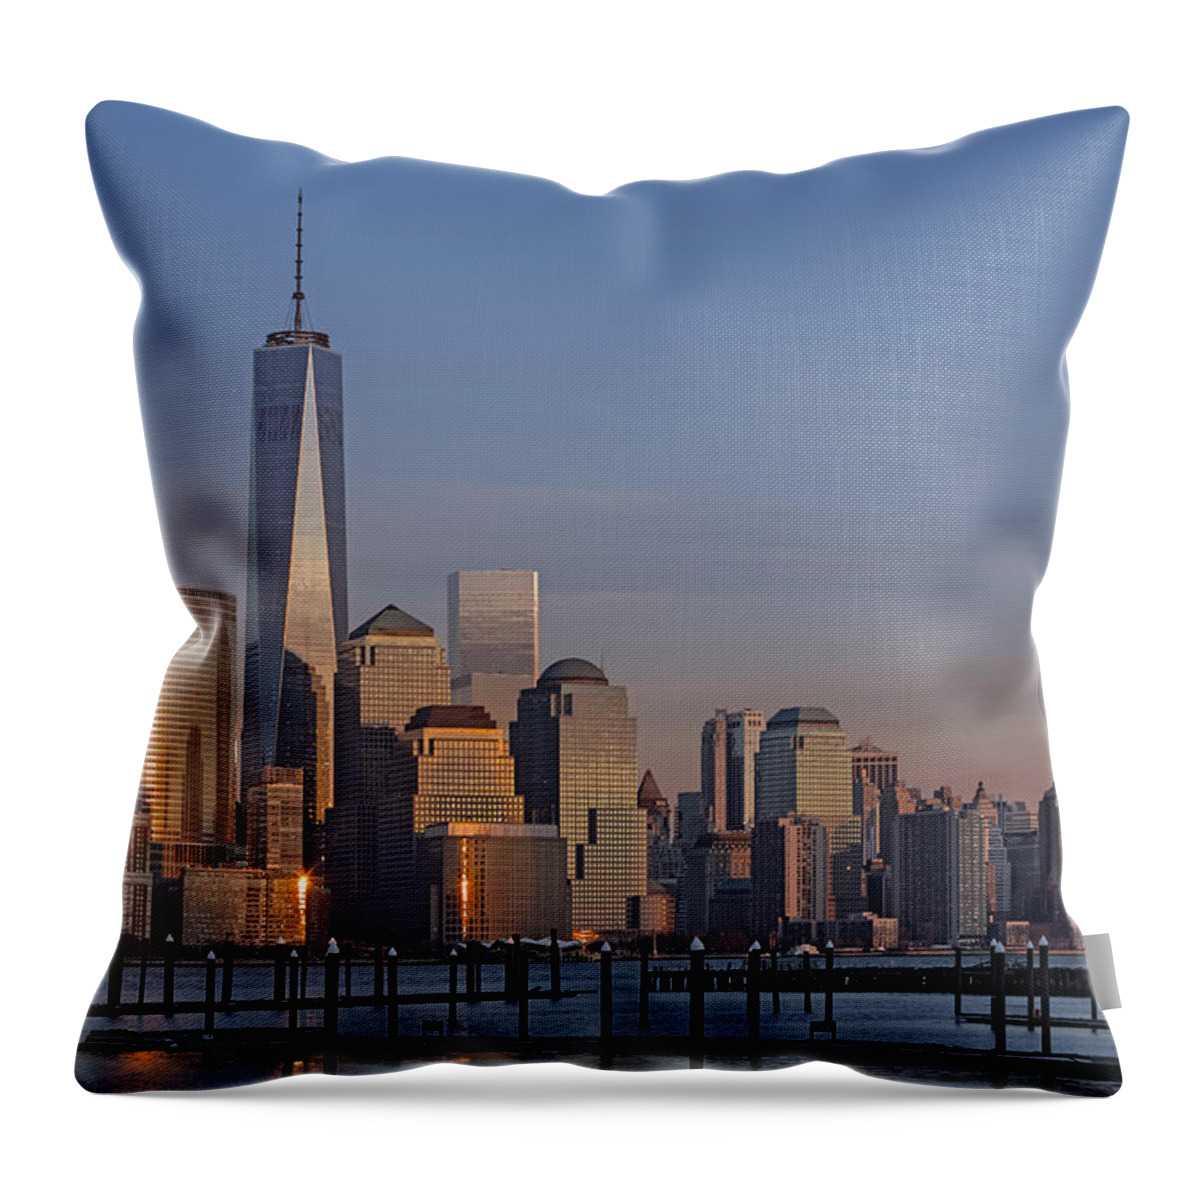 World Trade Center Throw Pillow featuring the photograph Lower Manhattan Skyline by Susan Candelario